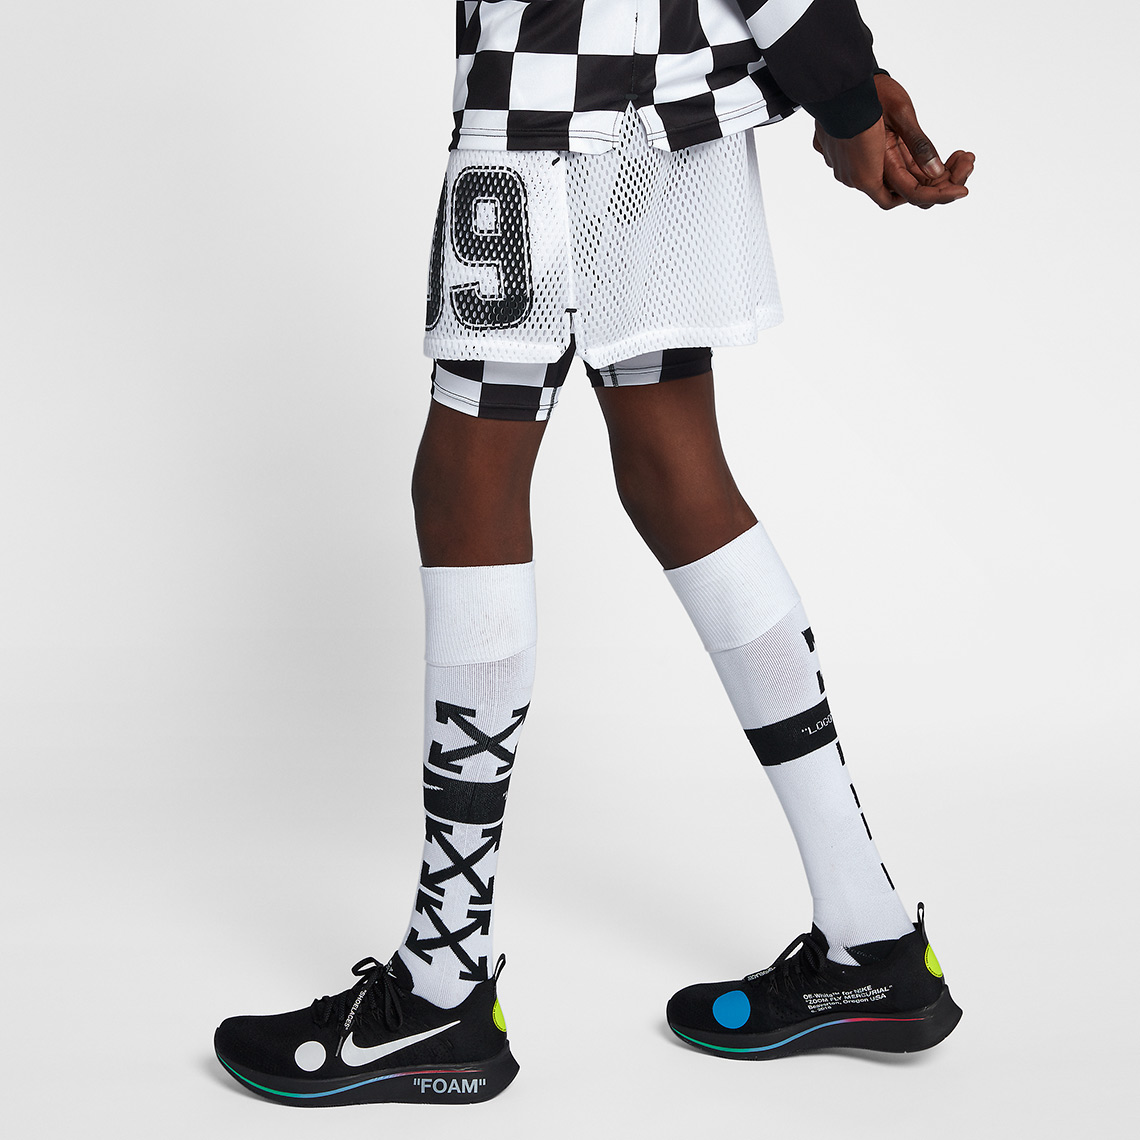 OFF WHITE Nike Football Apparel Release Info | SneakerNews.com